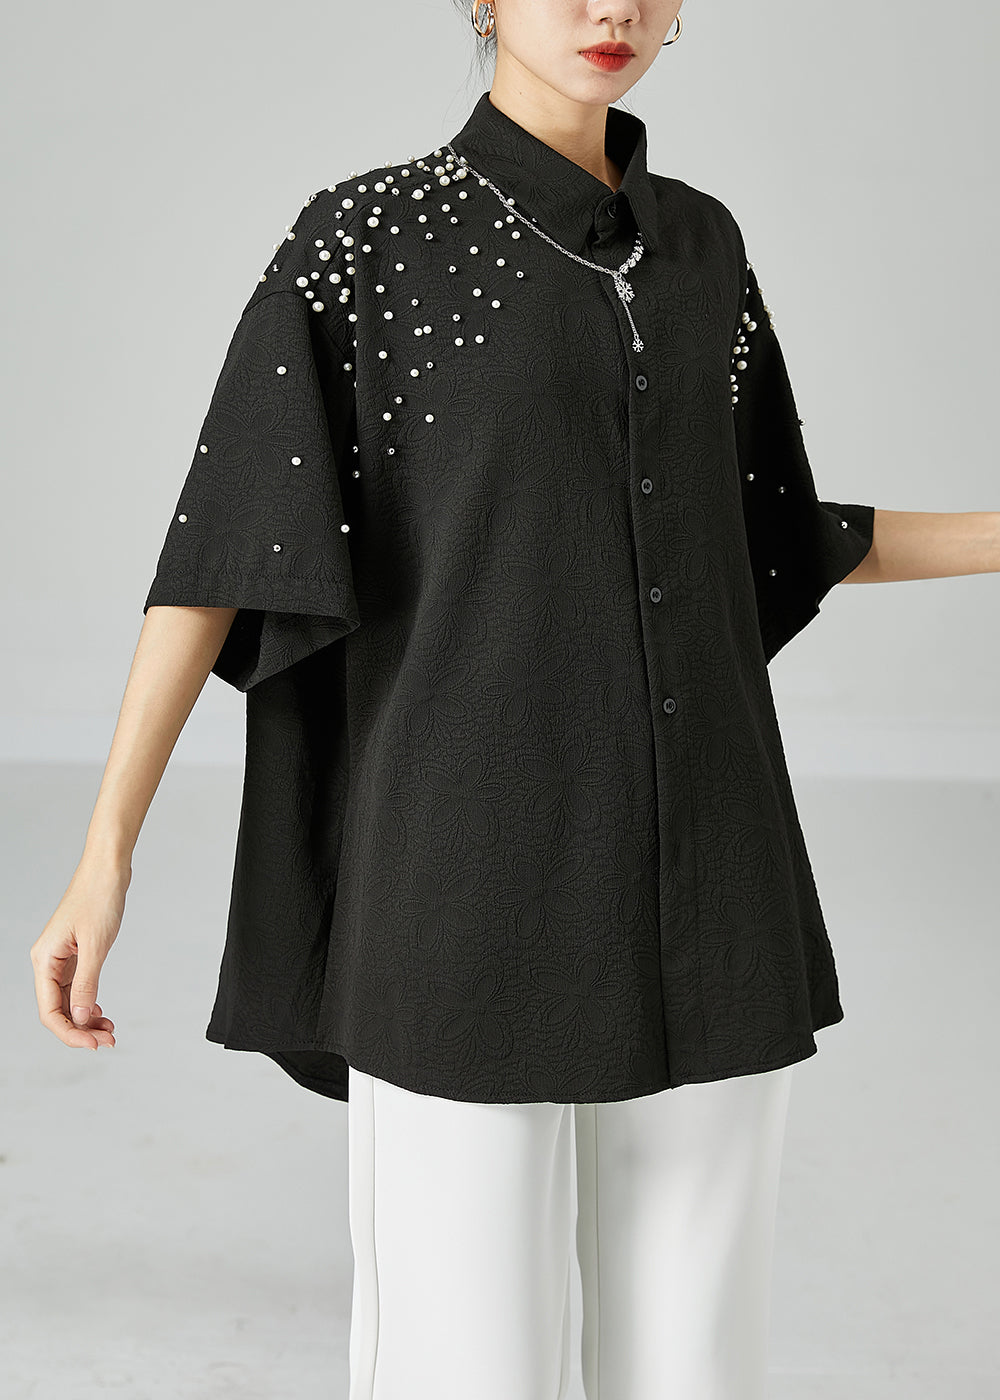 Handmade Black Oversized Nail Bead Jacquard Cotton Blouses Short Sleeve LY2468 - fabuloryshop